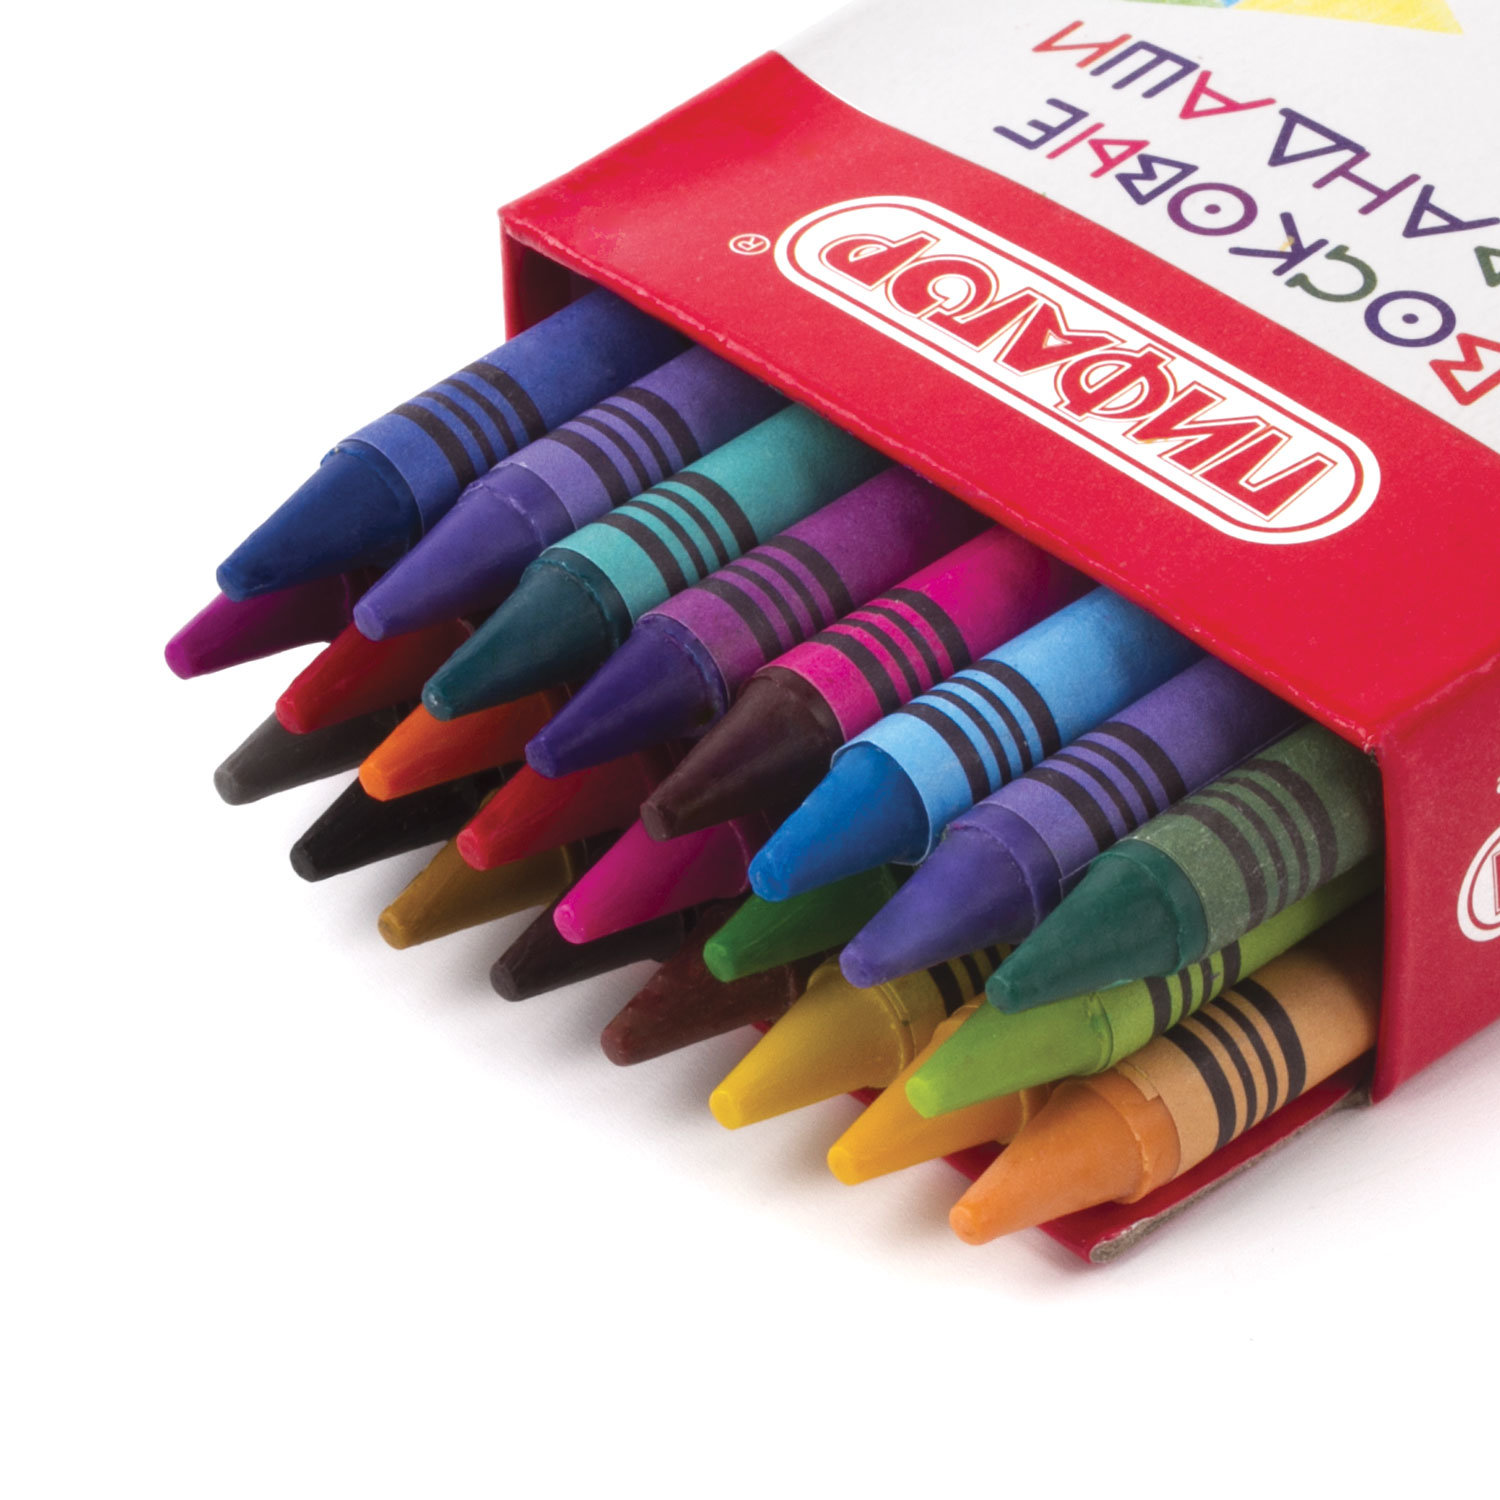 Восковые мелки Пифагор карандаши для рисования набор 24 цвета - фото 2